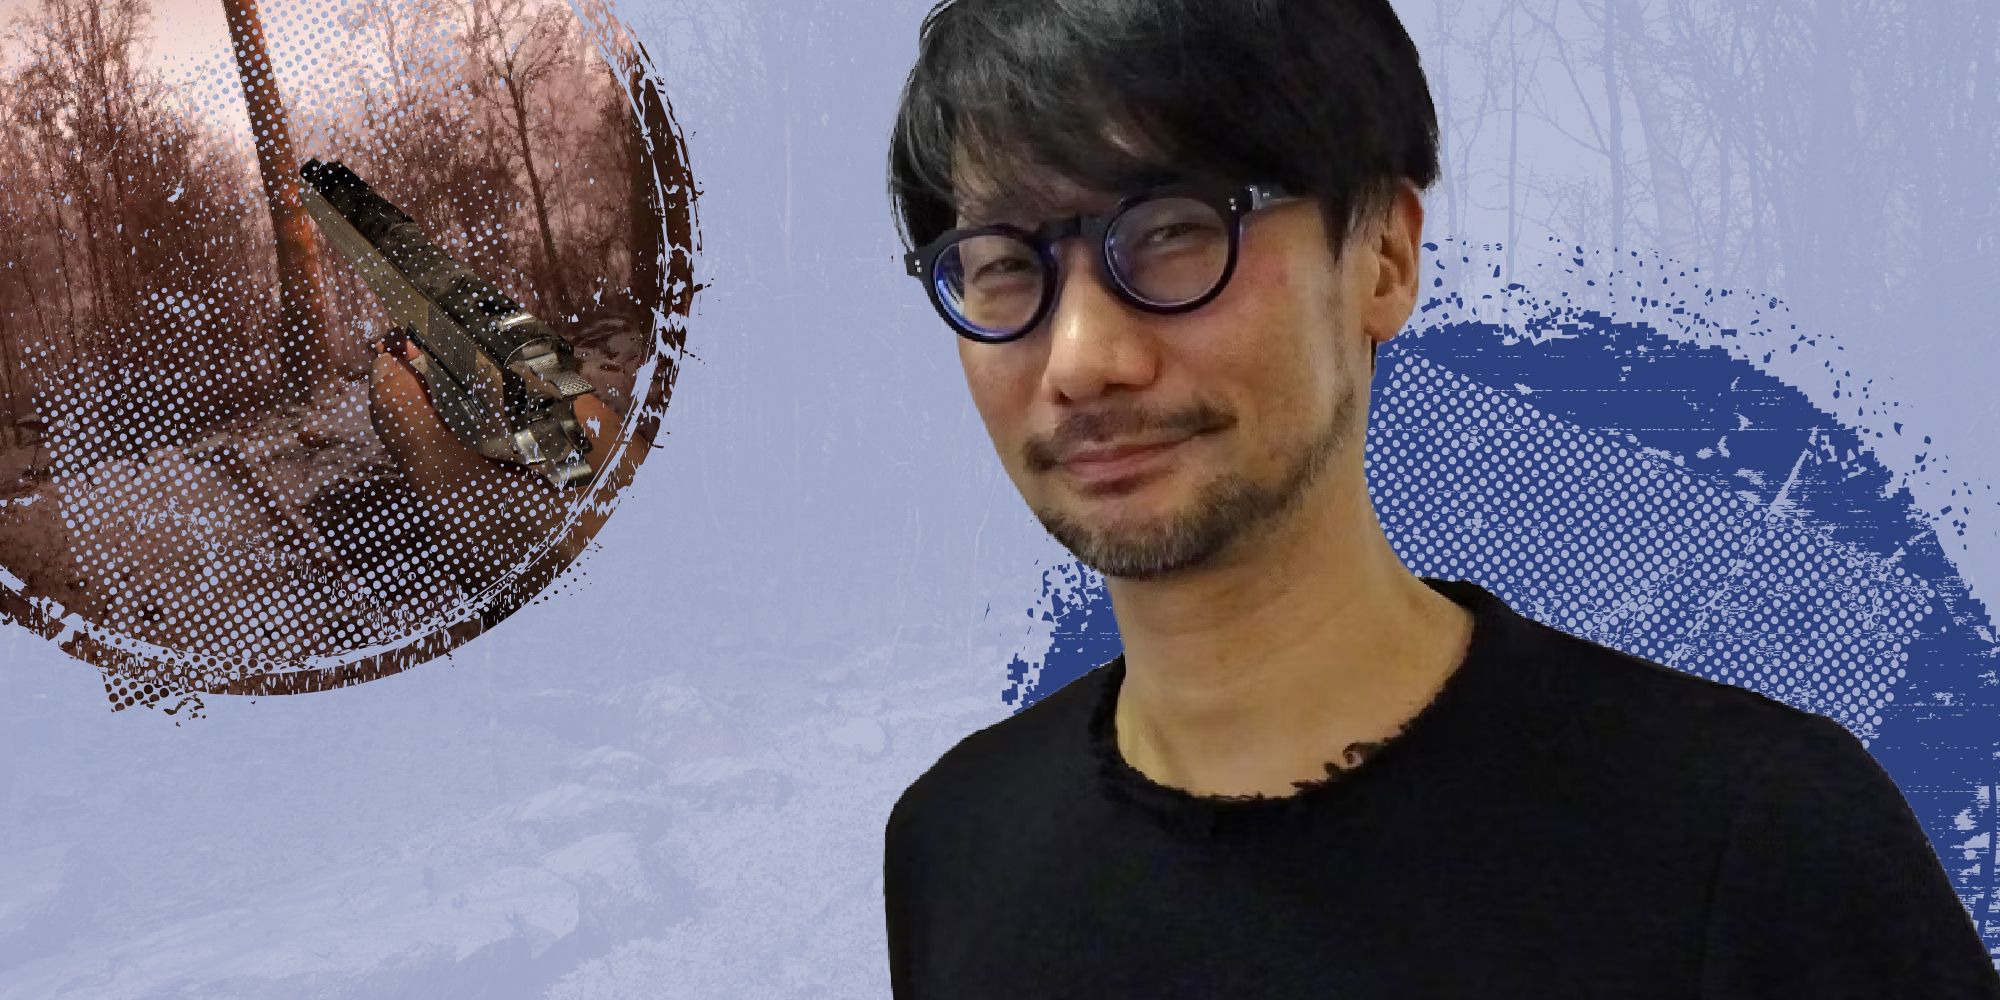 The Blue Box, Hideo Kojima, Silent Hill Saga Should Hopefully Be